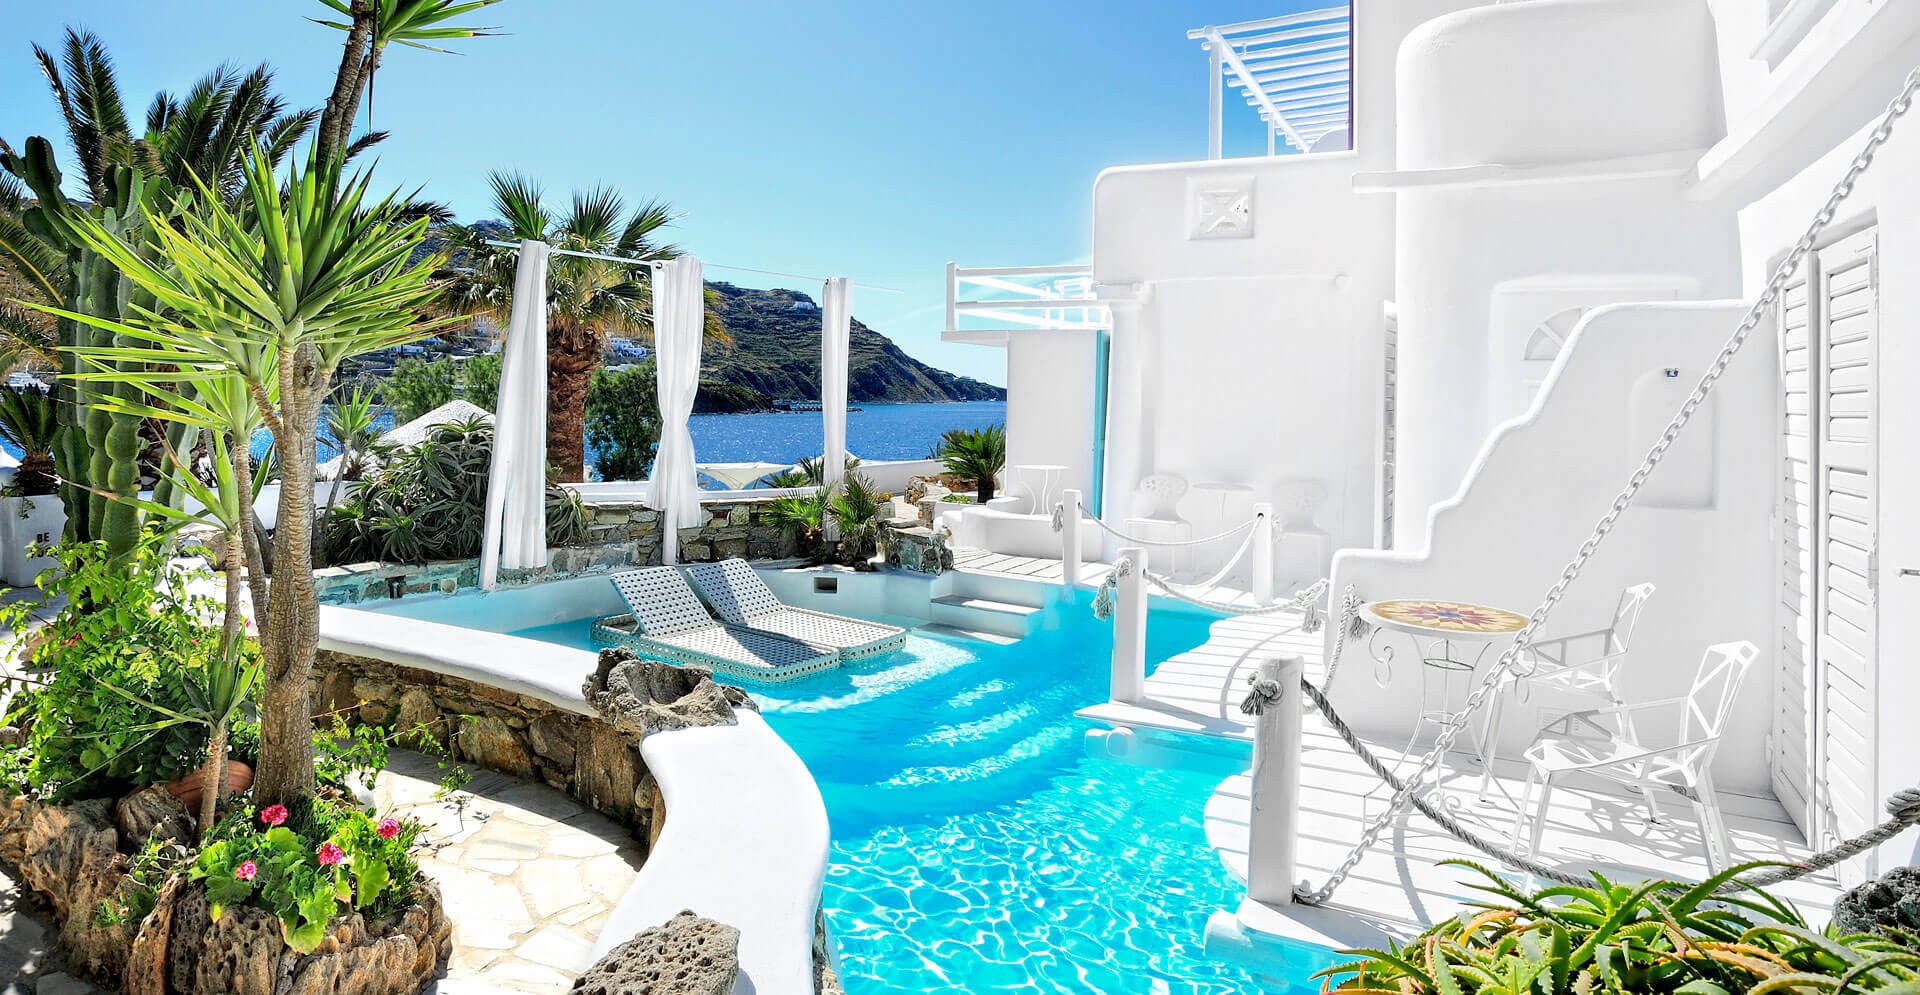 Luxury 2-bedroom suite with pool in Mykonos